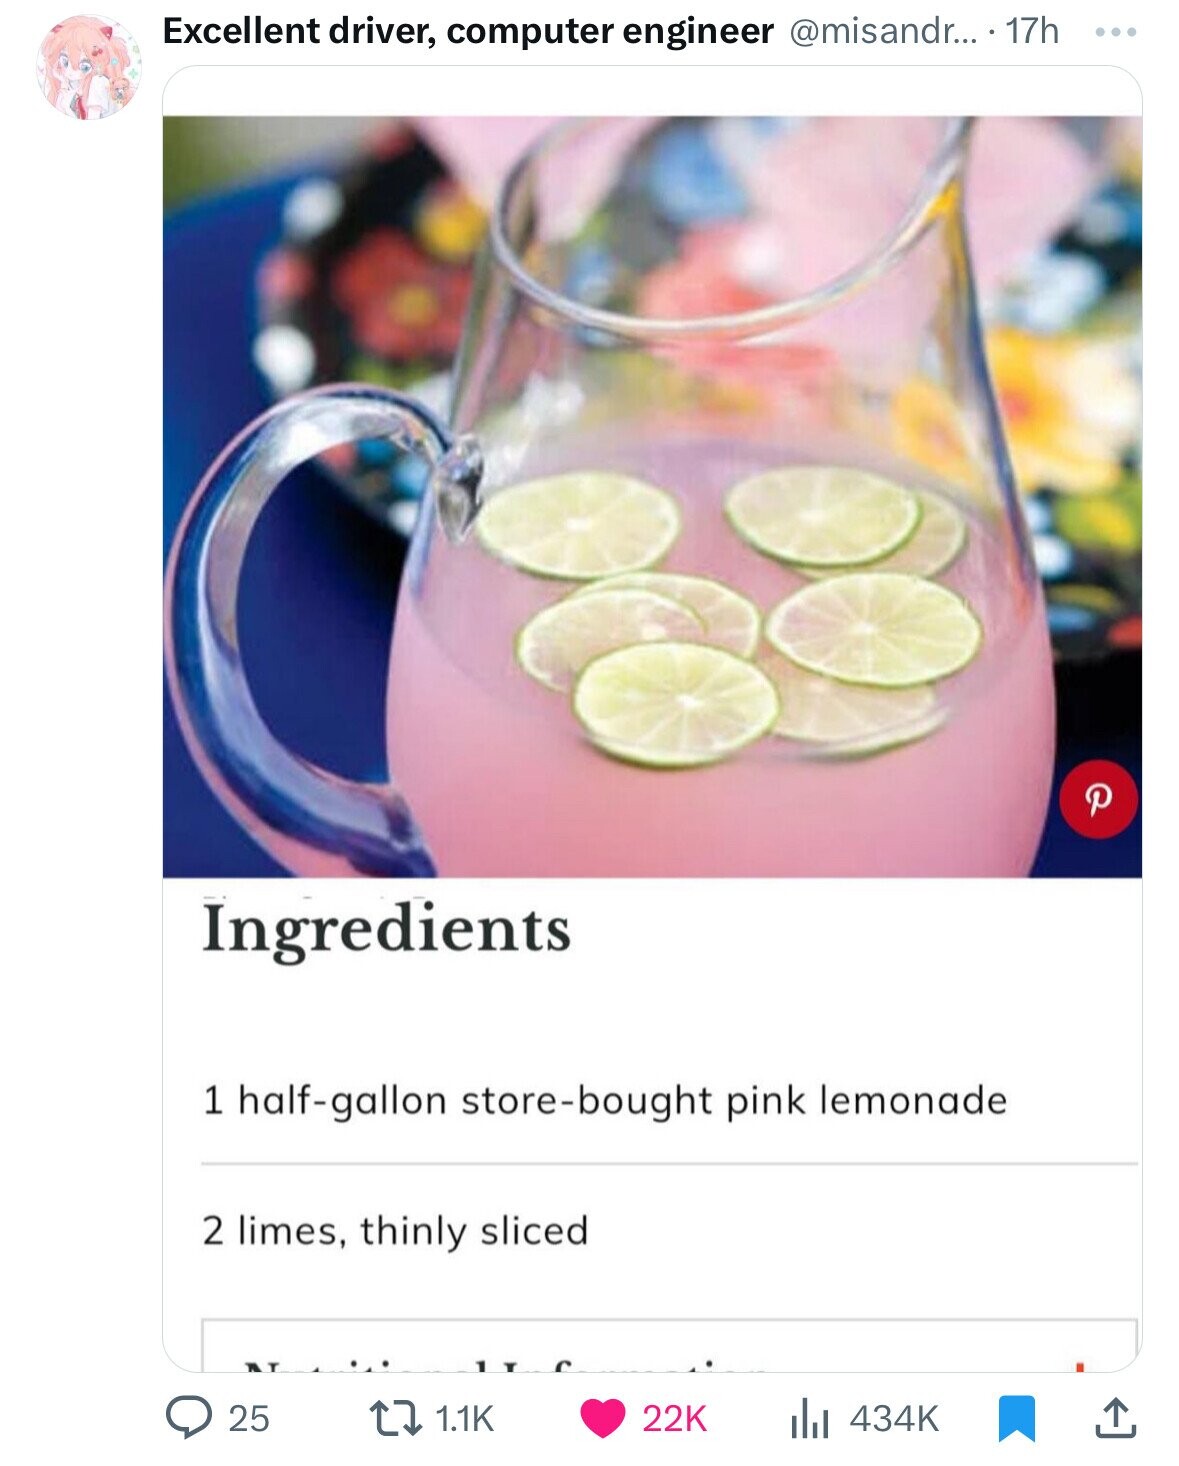 make pink lemonade ingredients - Excellent driver, computer engineer ... 17h Ingredients 1 halfgallon storebought pink lemonade 2 limes, thinly sliced. Q 25 1 T C 22K ill ... P